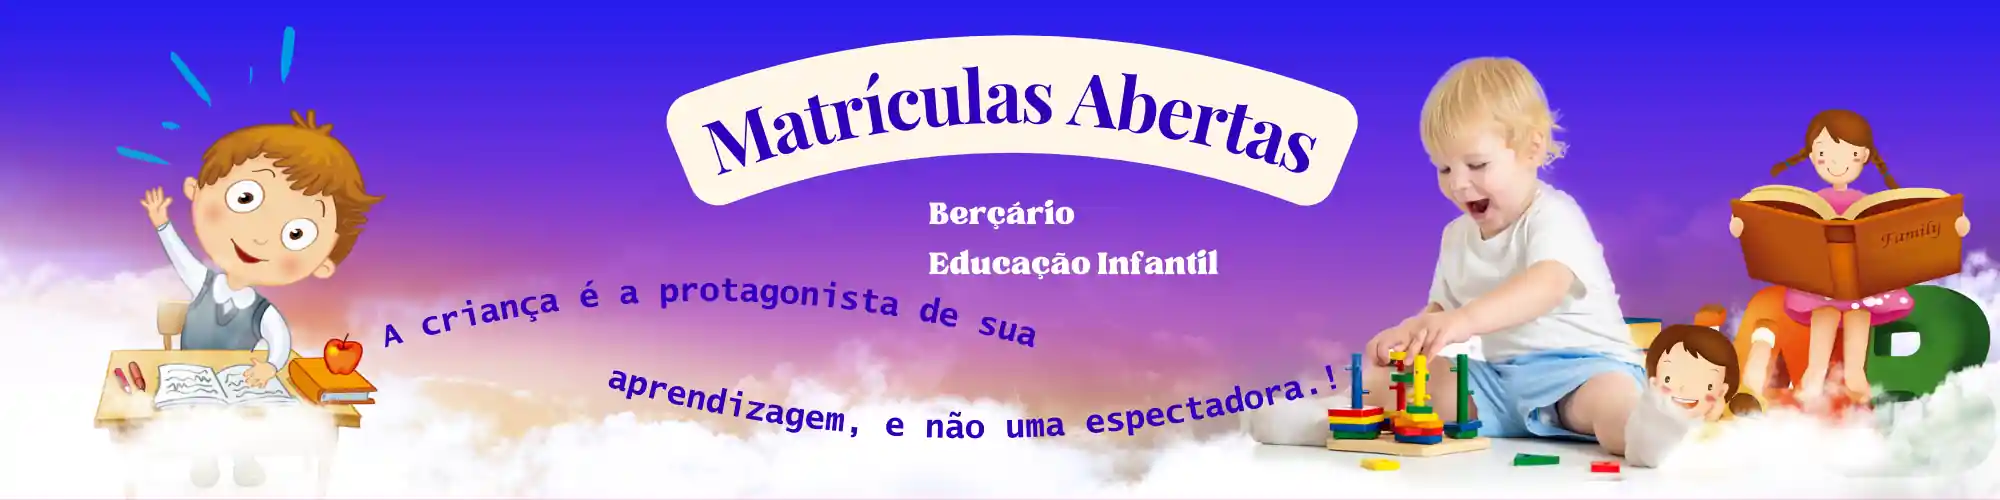 bercario_ipiranga_escola_planetadoce_ipiranga